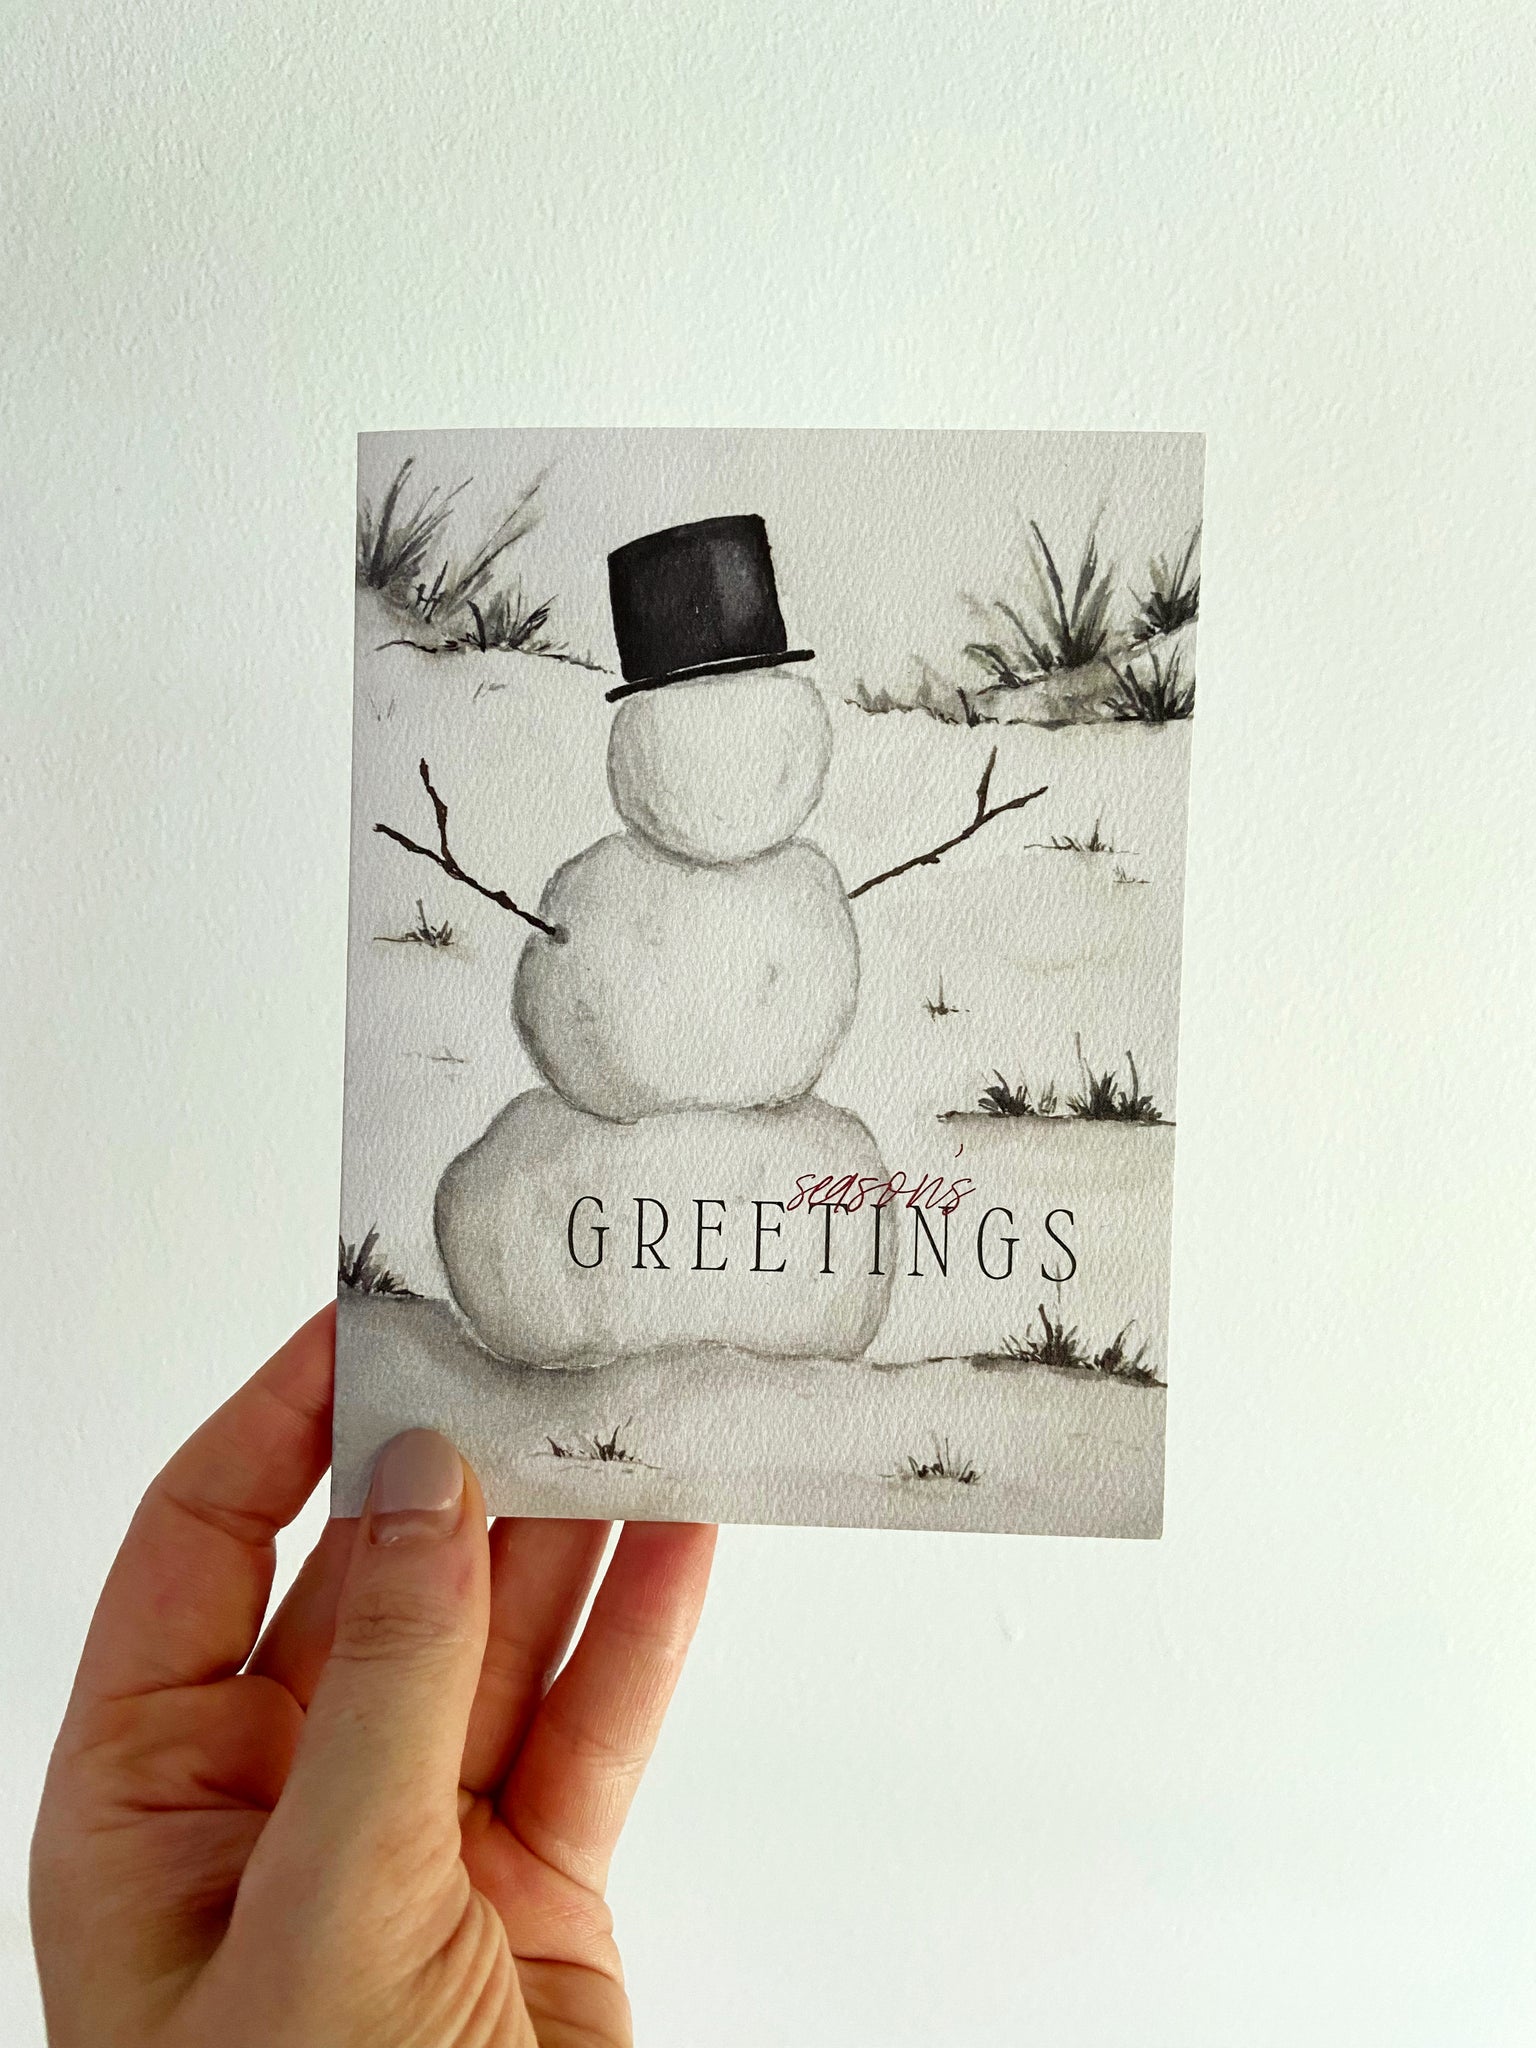 Merry Christmas Card Draama Easy steps / Happy Christmas Greeting Card  Making Ideas Easy / Christmas Card Making Ideas #ChristmasCardDrawing  #MerryChristmas #Christmas #Drawing #Card #Painting #Sketch  #PremNathShuklaDrawing | Merry Christmas Card Draama